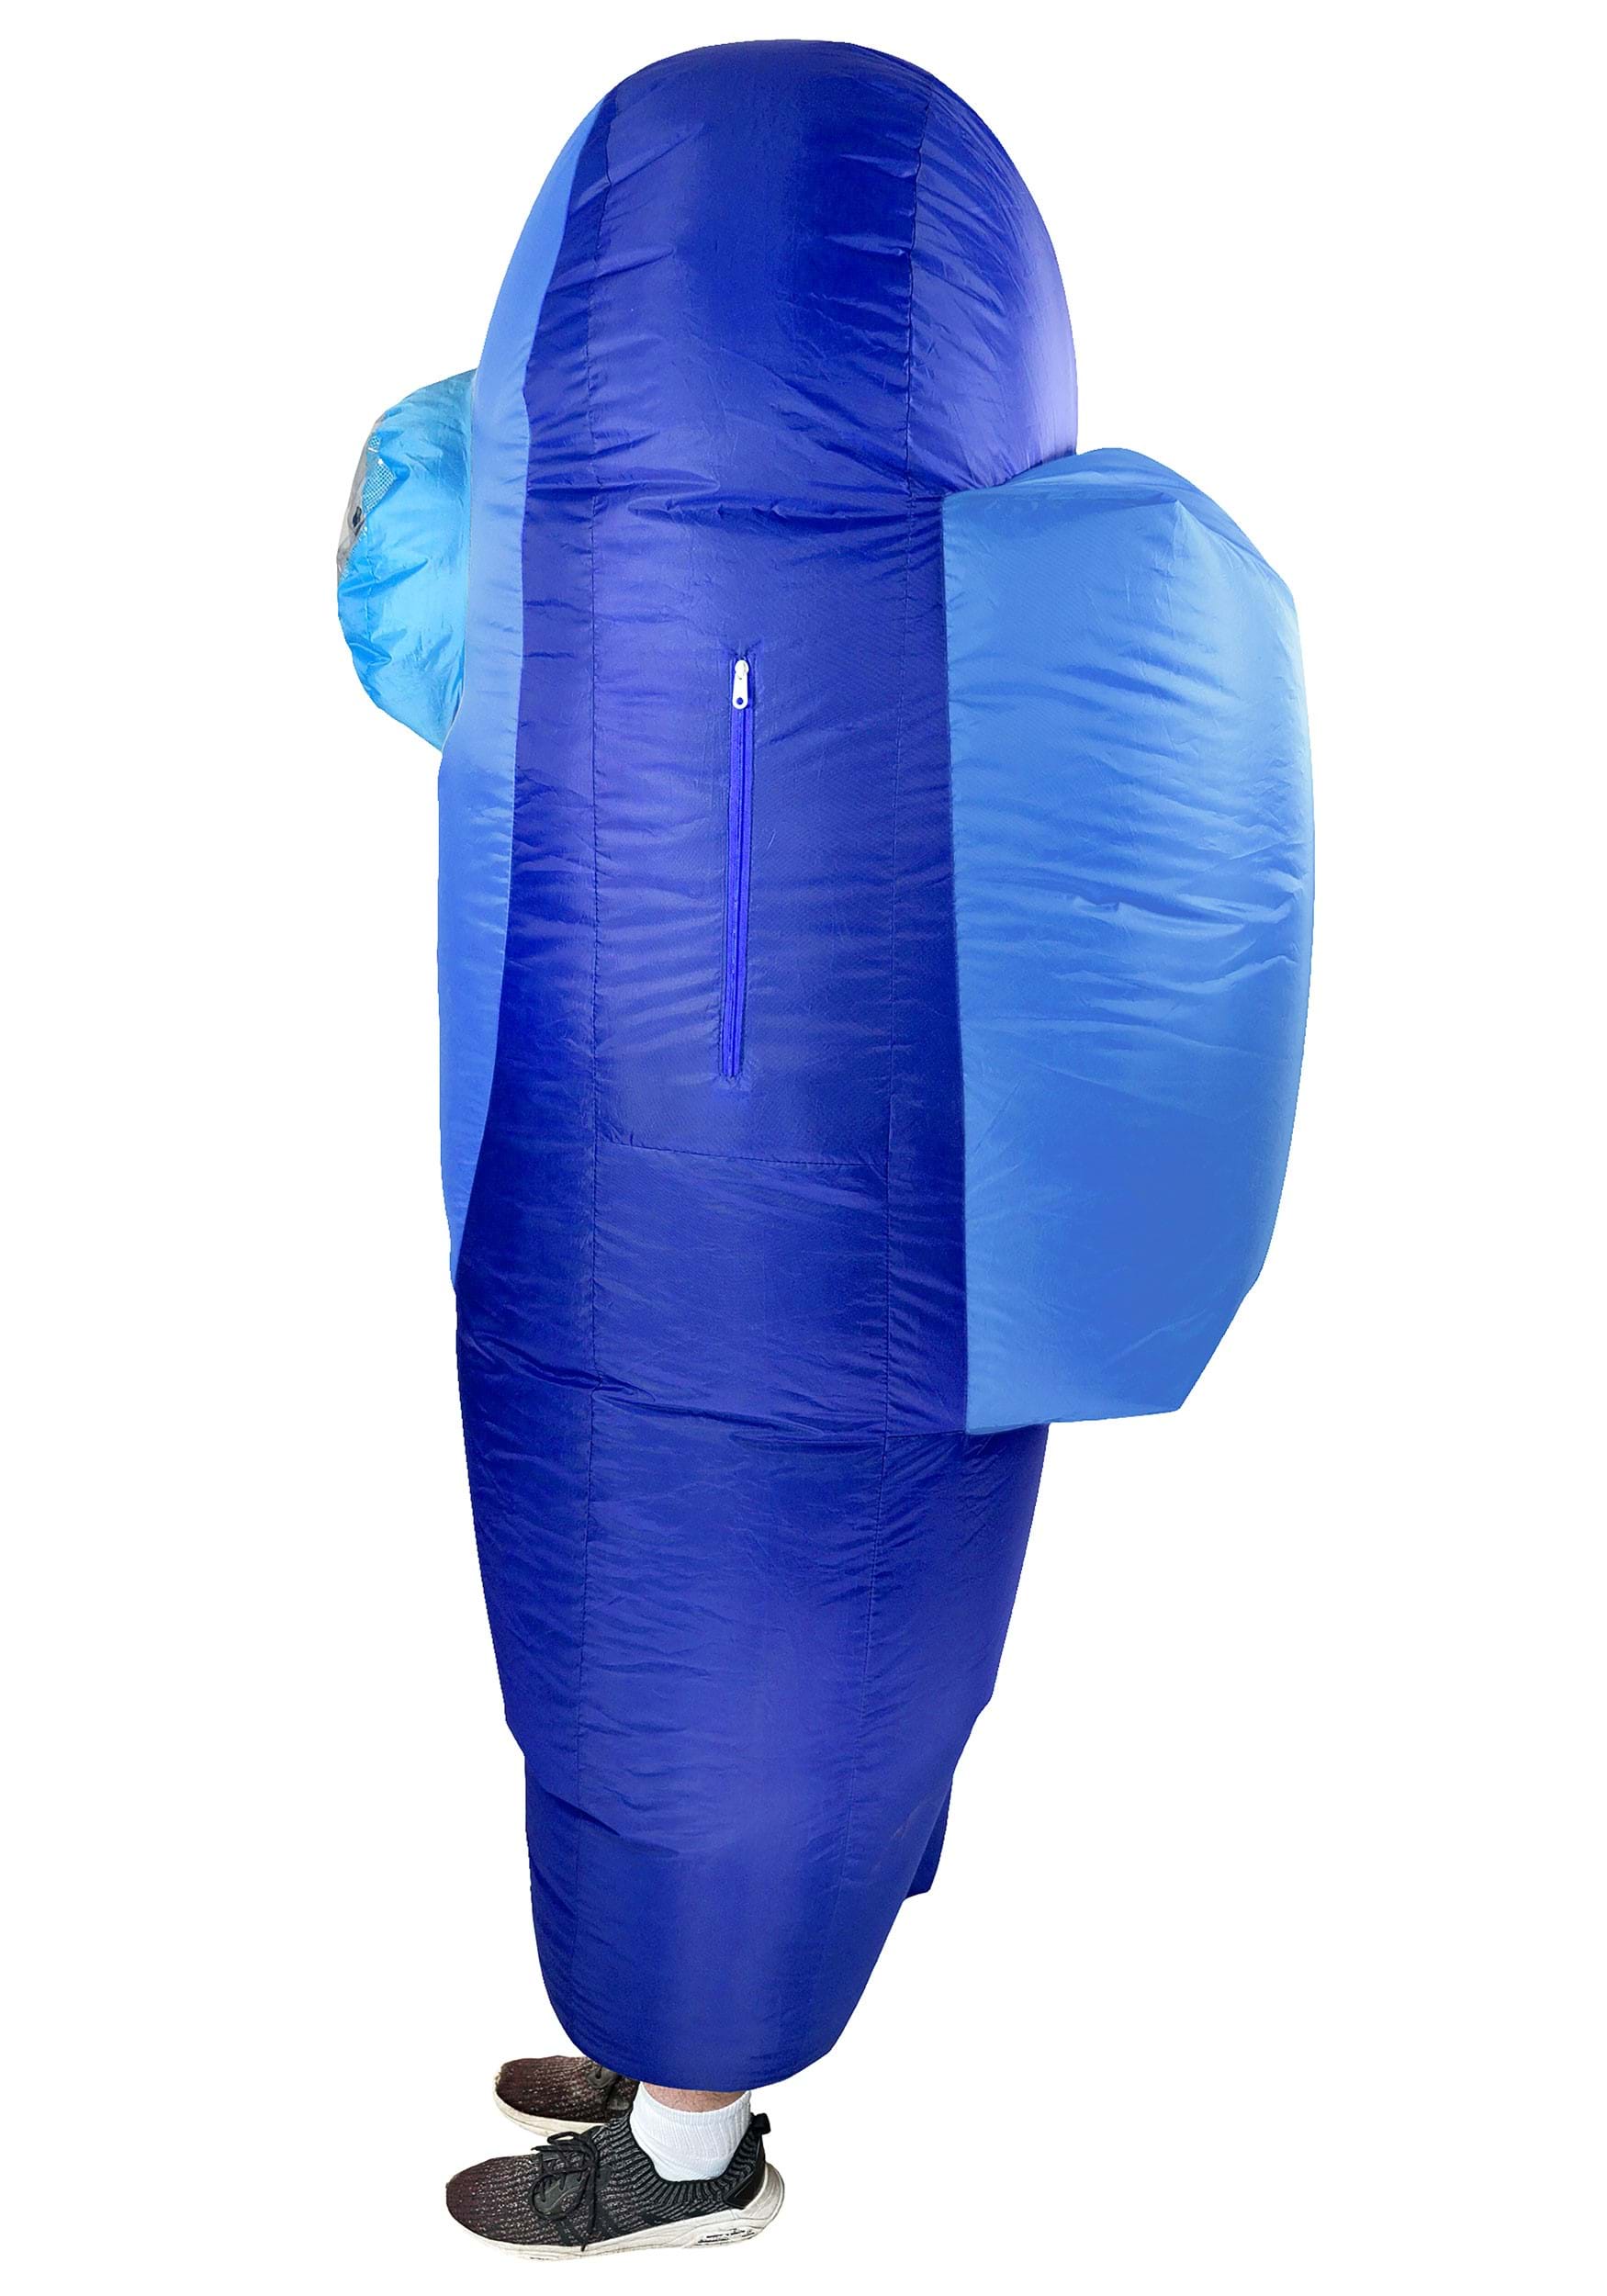 Blue Sus Crewmate Killer Costume For Kids